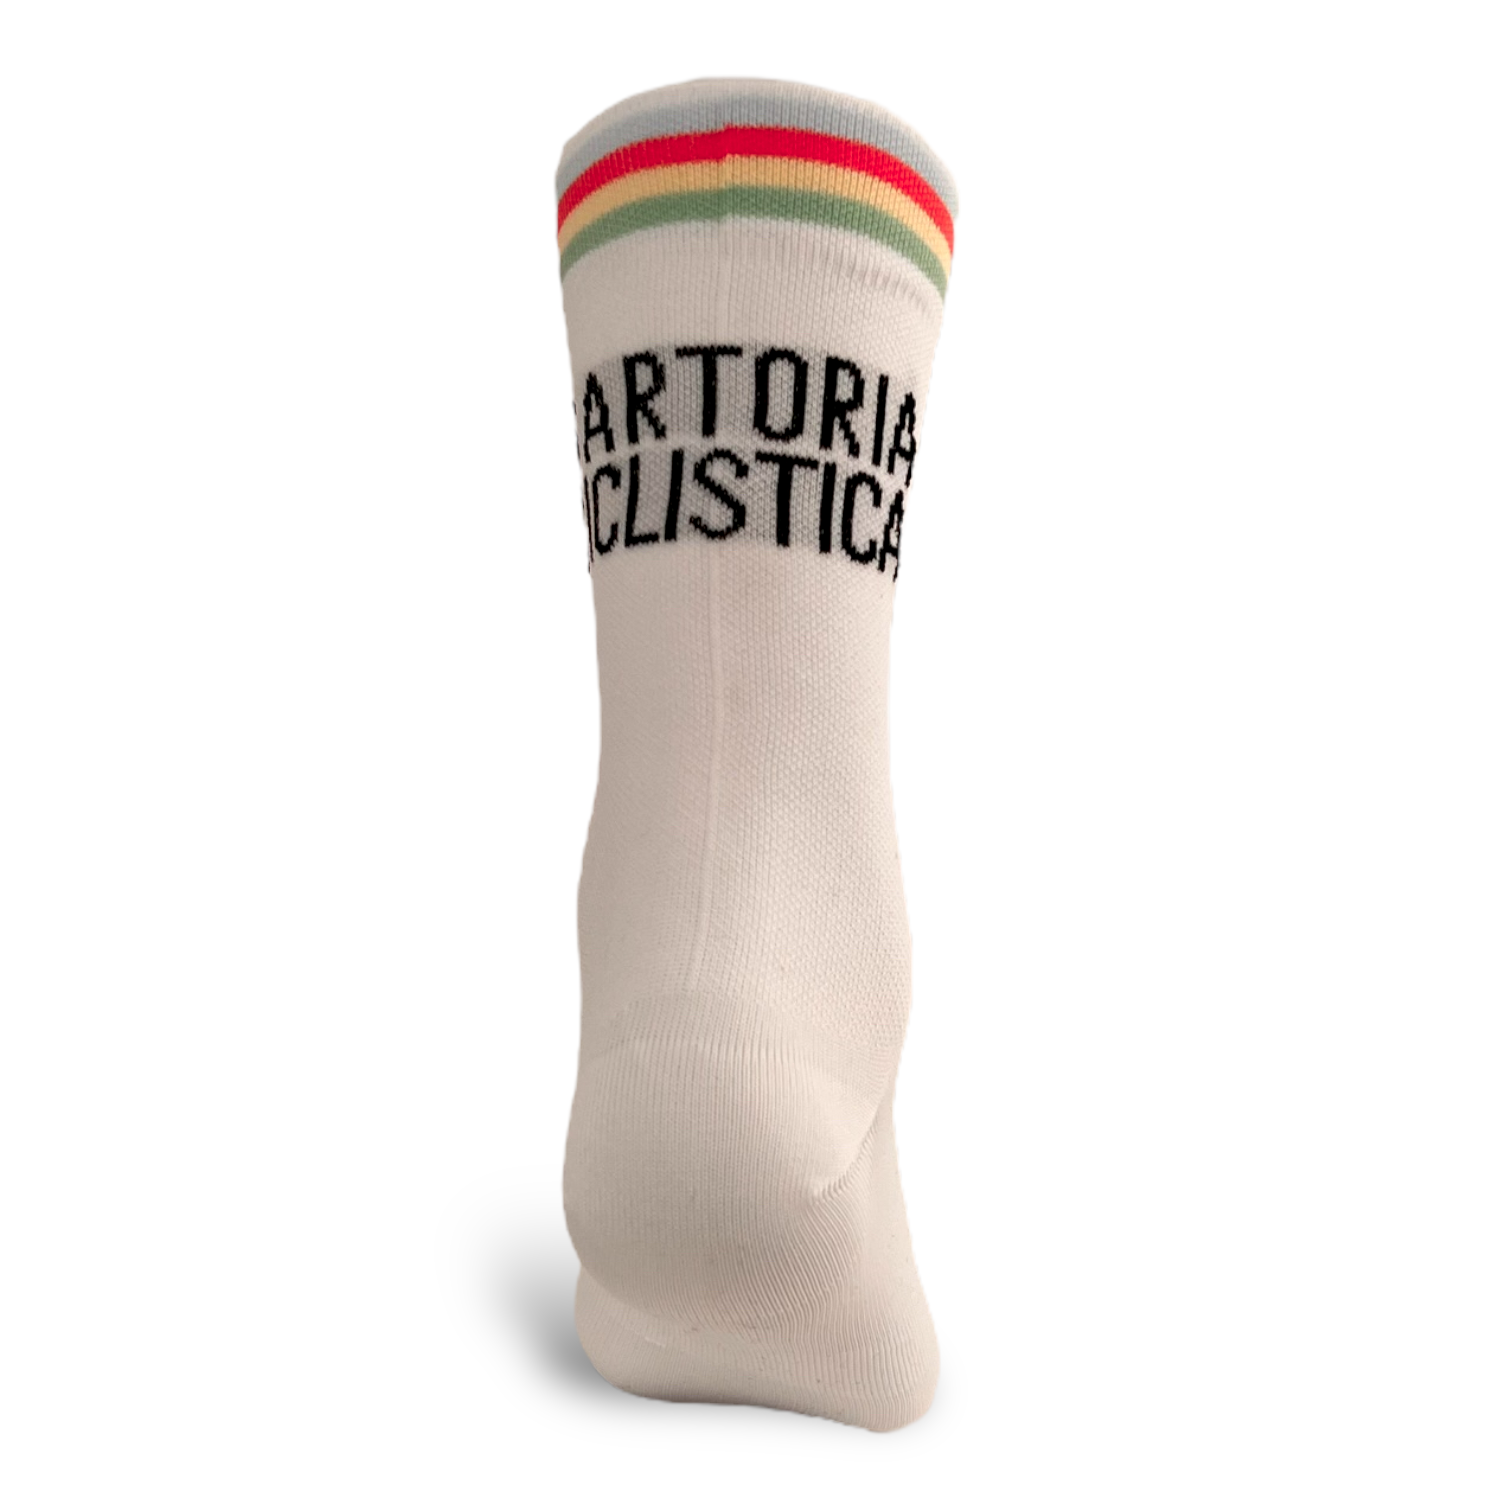 Sartoria Ciclistica Socks - White 